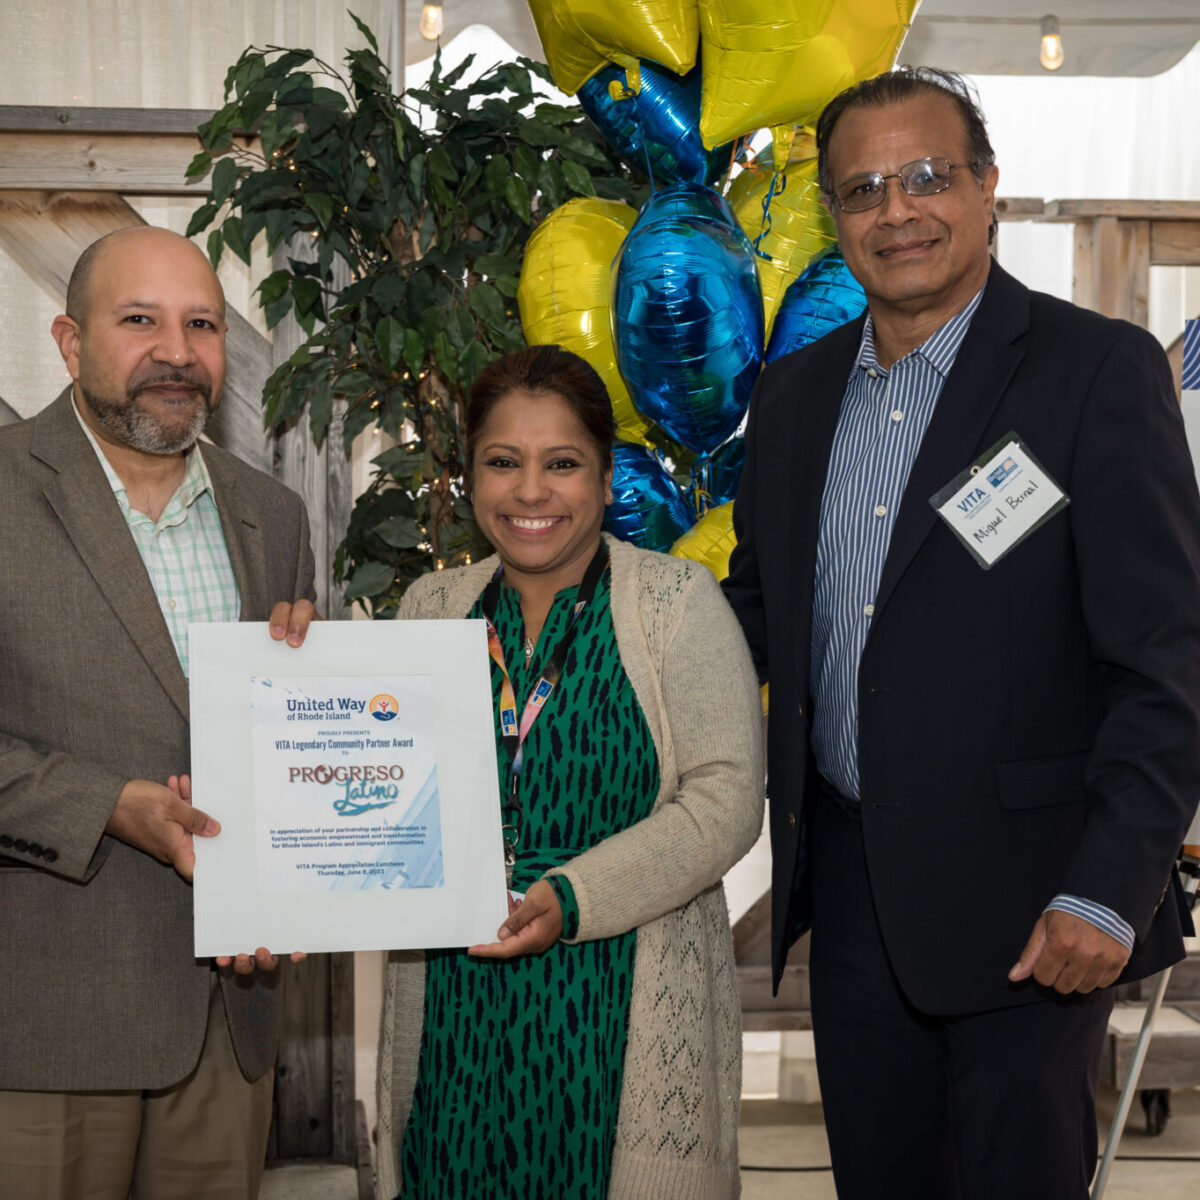 Roshni Darnal presents the VITA Legendary Community Partner Award to Progreso Latino.